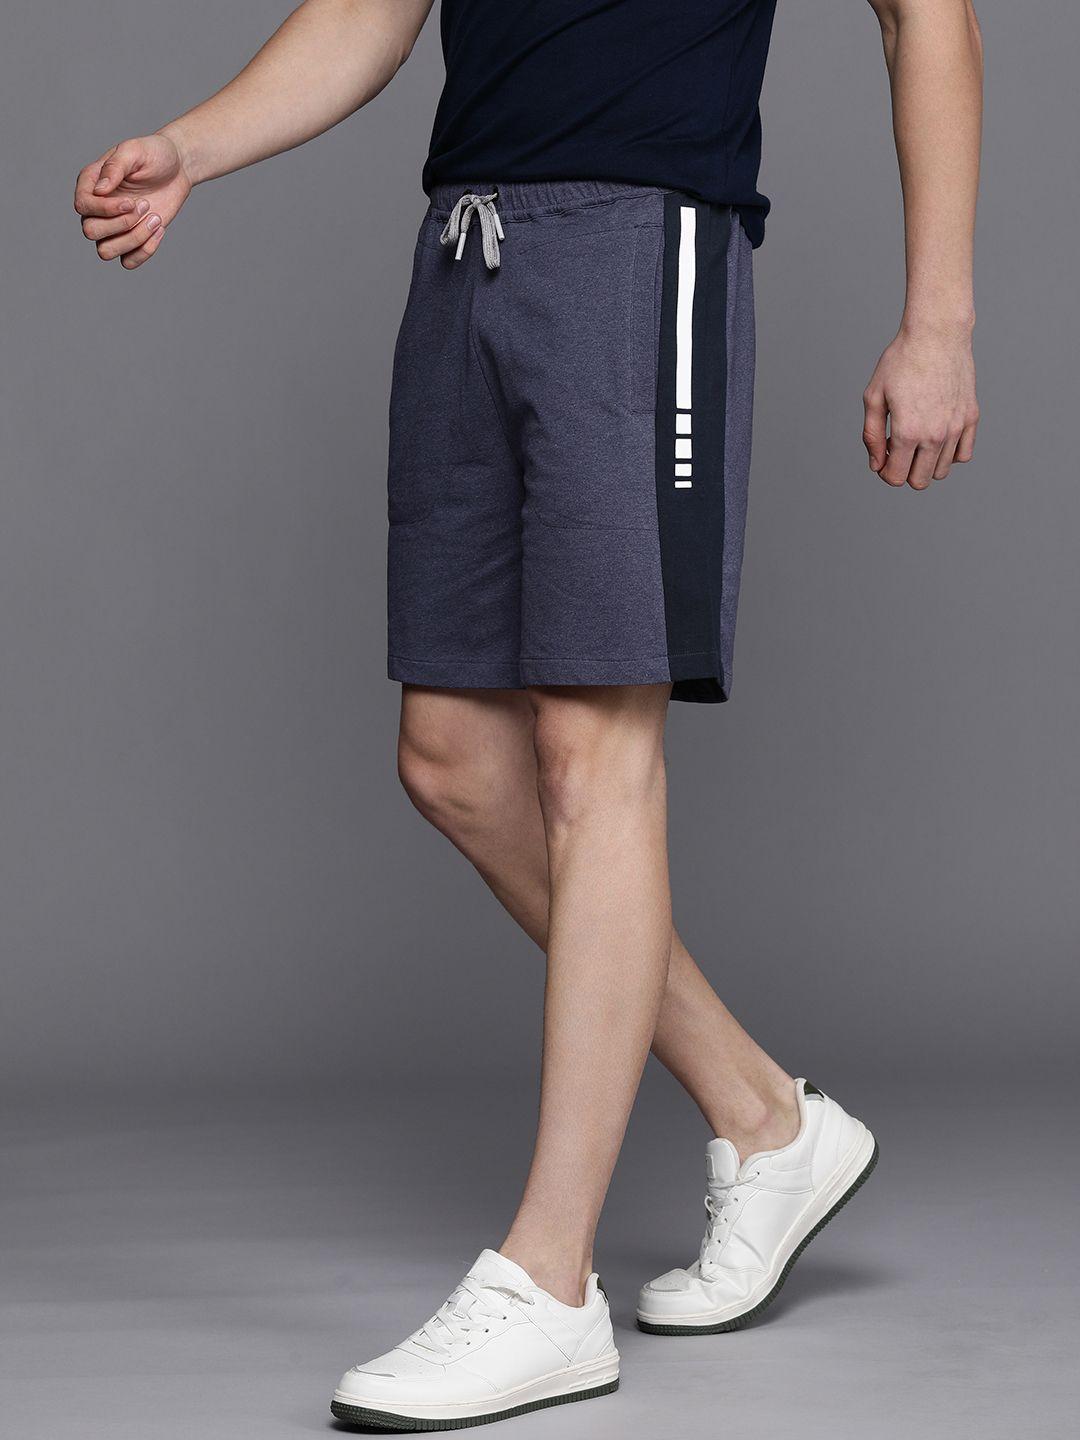 louis philippe athplay men blue & black colourblocked slim fit shorts